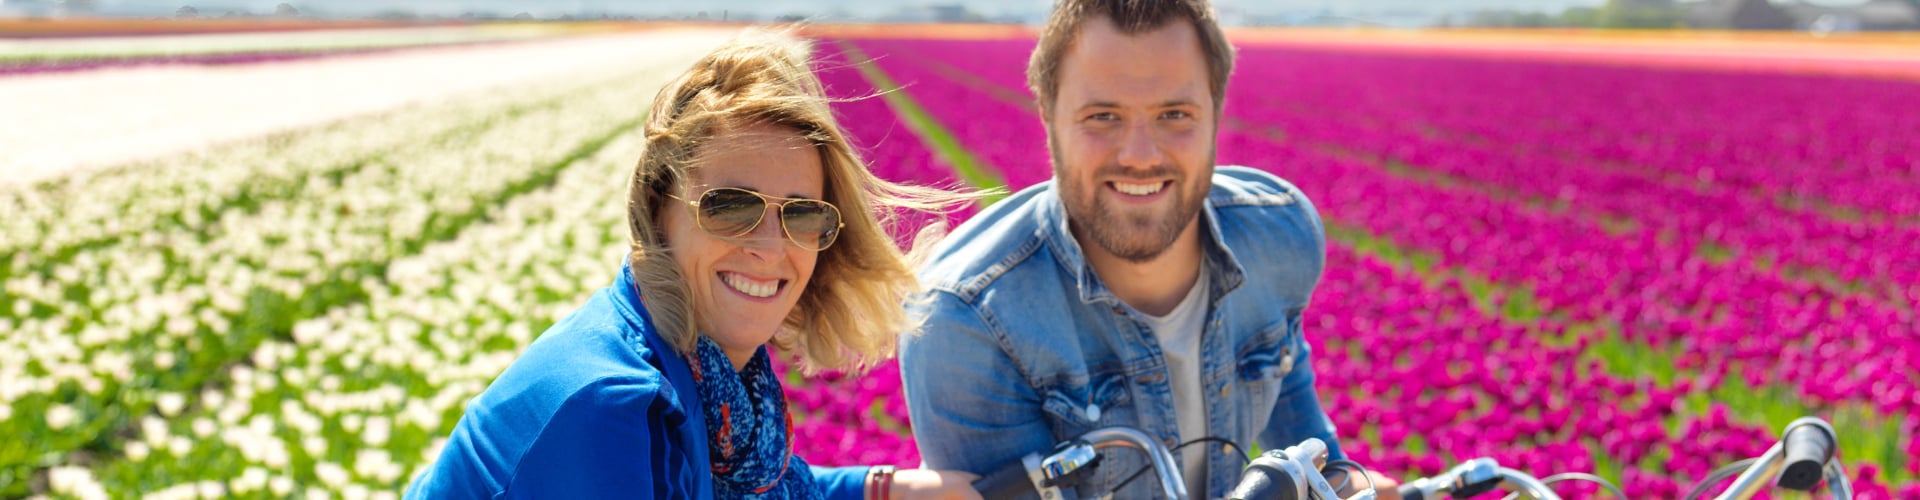 Bike ride tour between Tulip fields Lisse Holland